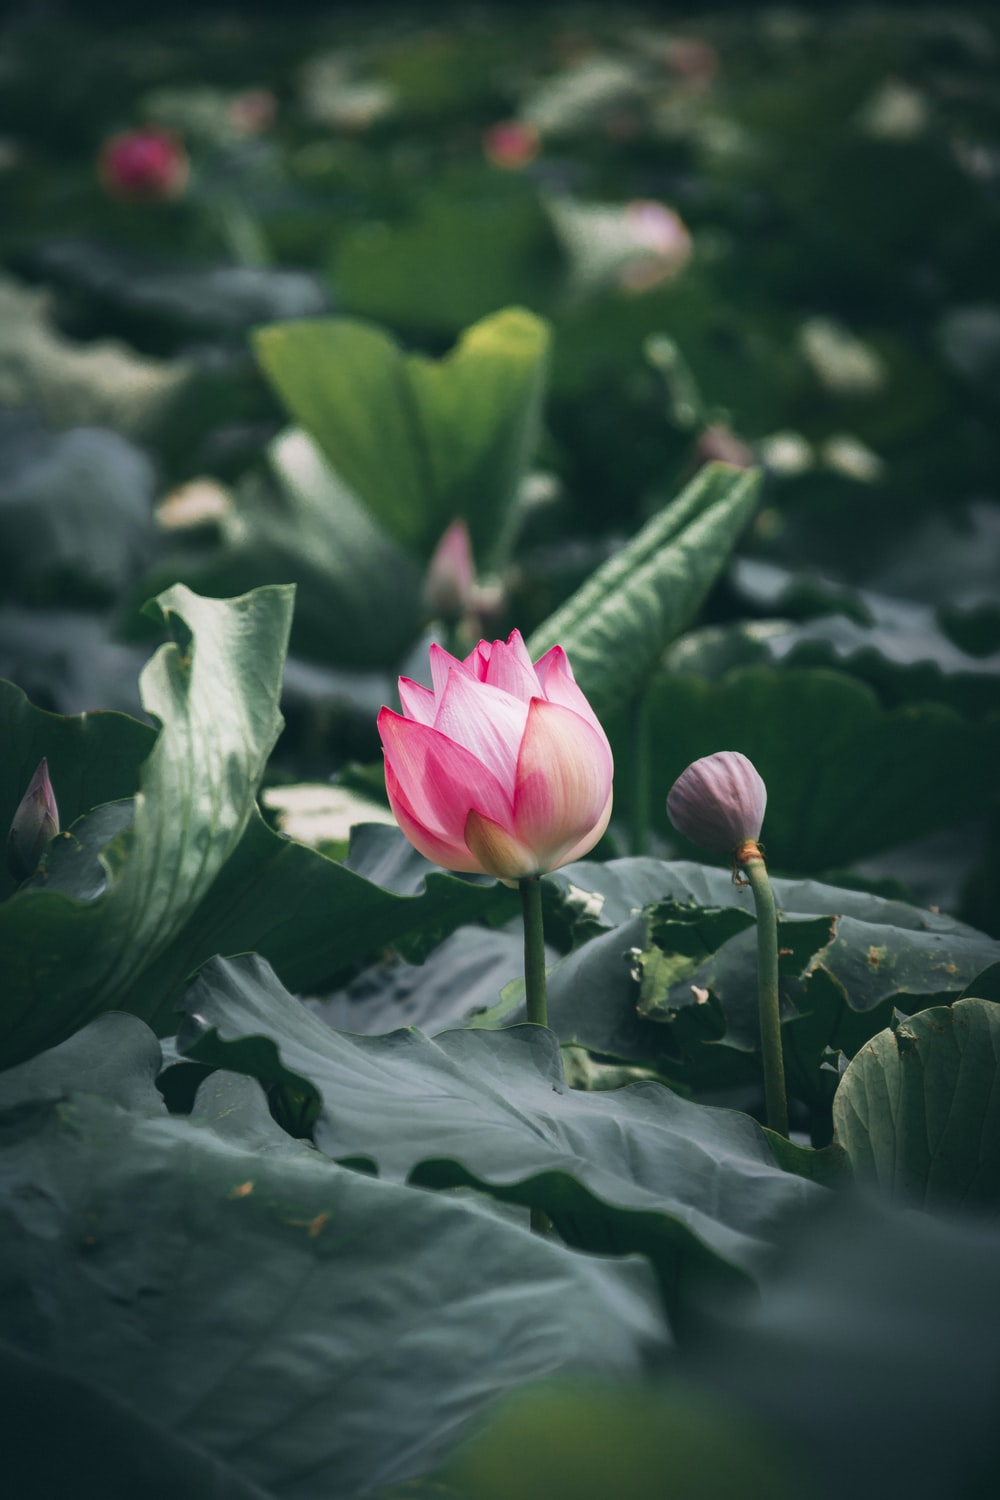 Lotus Flower Picture. Download Free Image